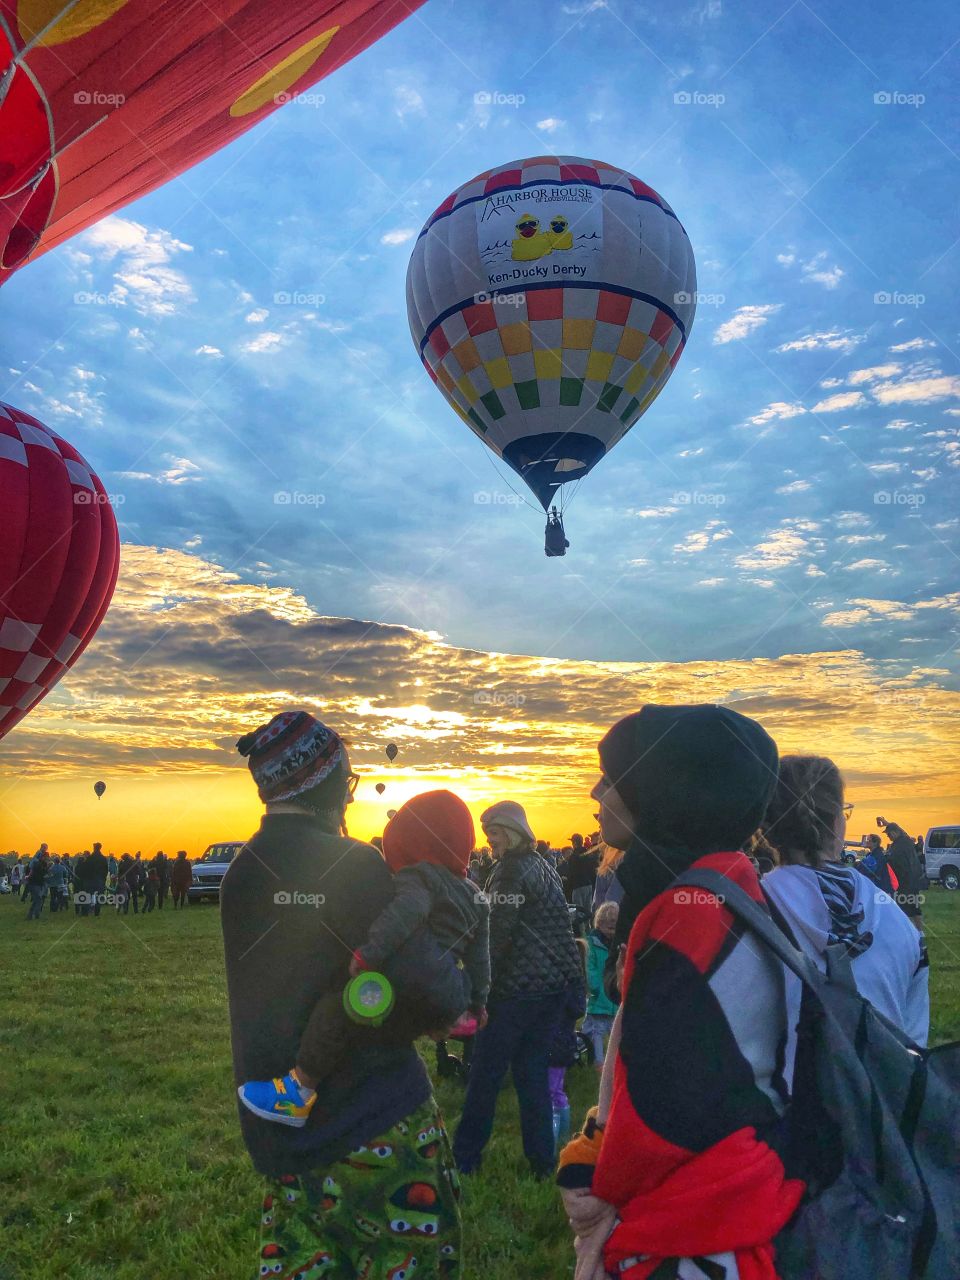 Balloon, People, Hot Air Balloon, Festival, Recreation